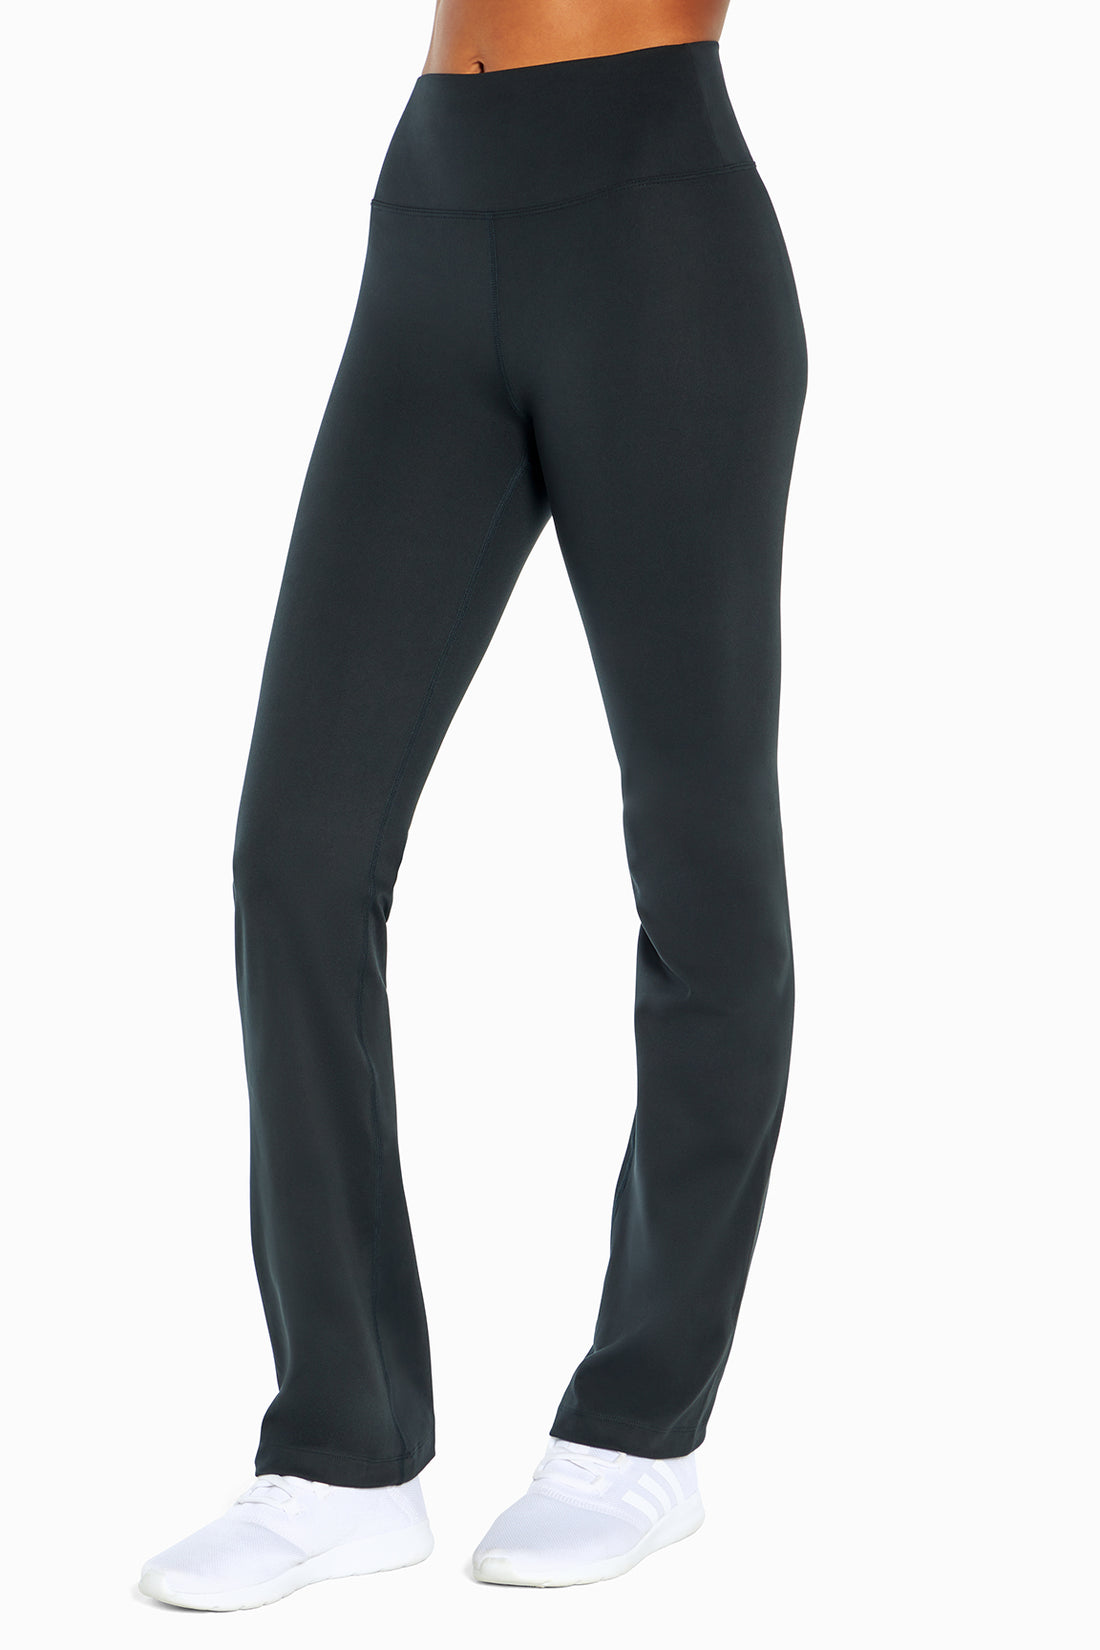 Balance Collection Black Active Pants Size M - 73% off